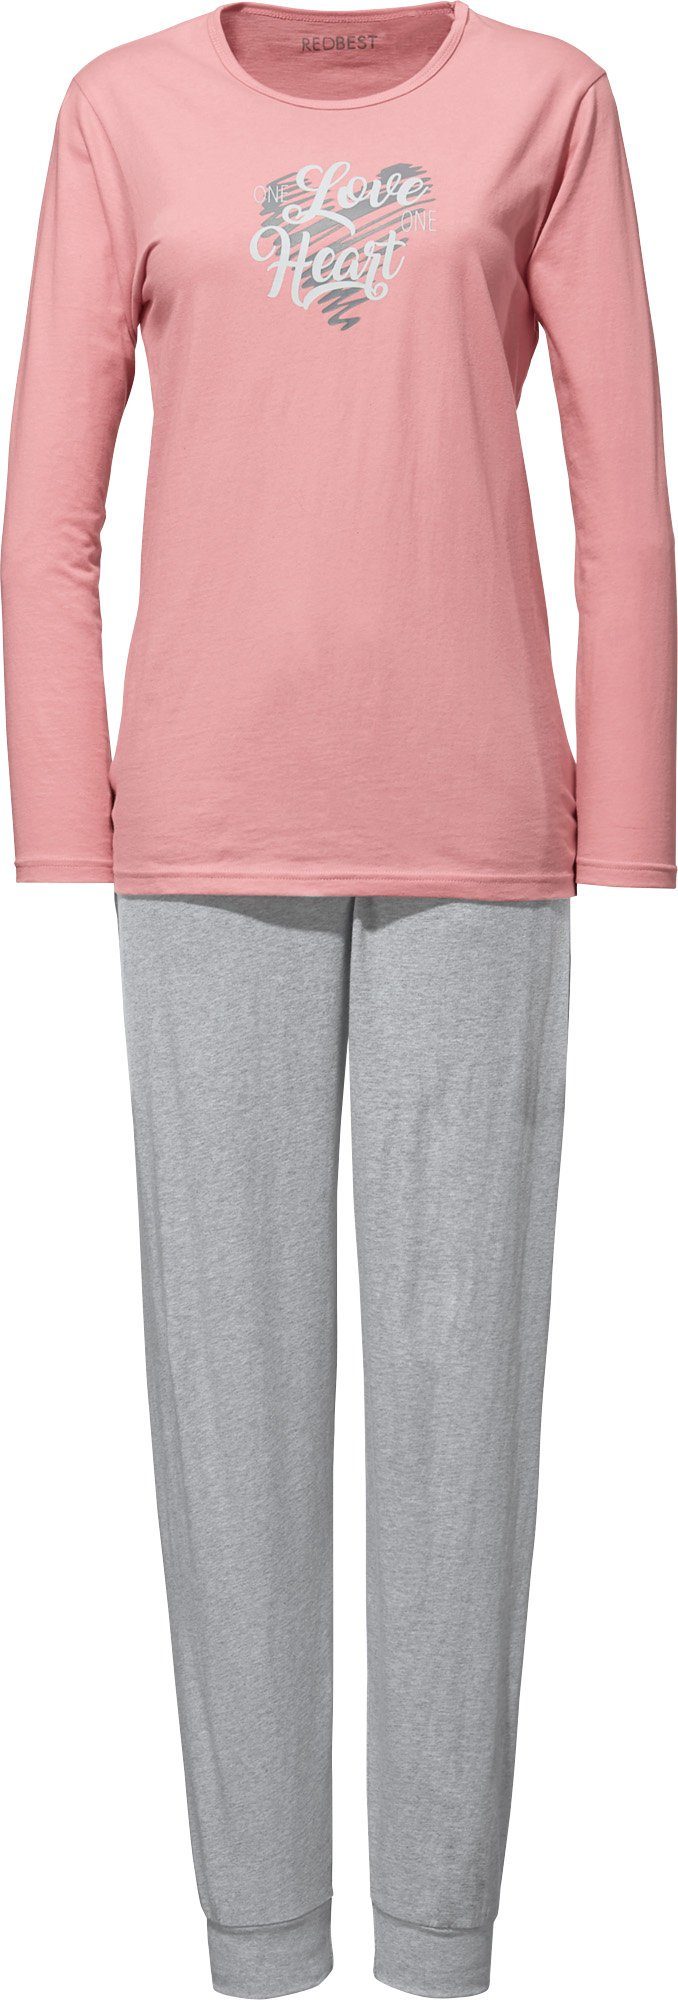 REDBEST Pyjama Damen-Schlafanzug Single-Jersey Uni | Pyjamas